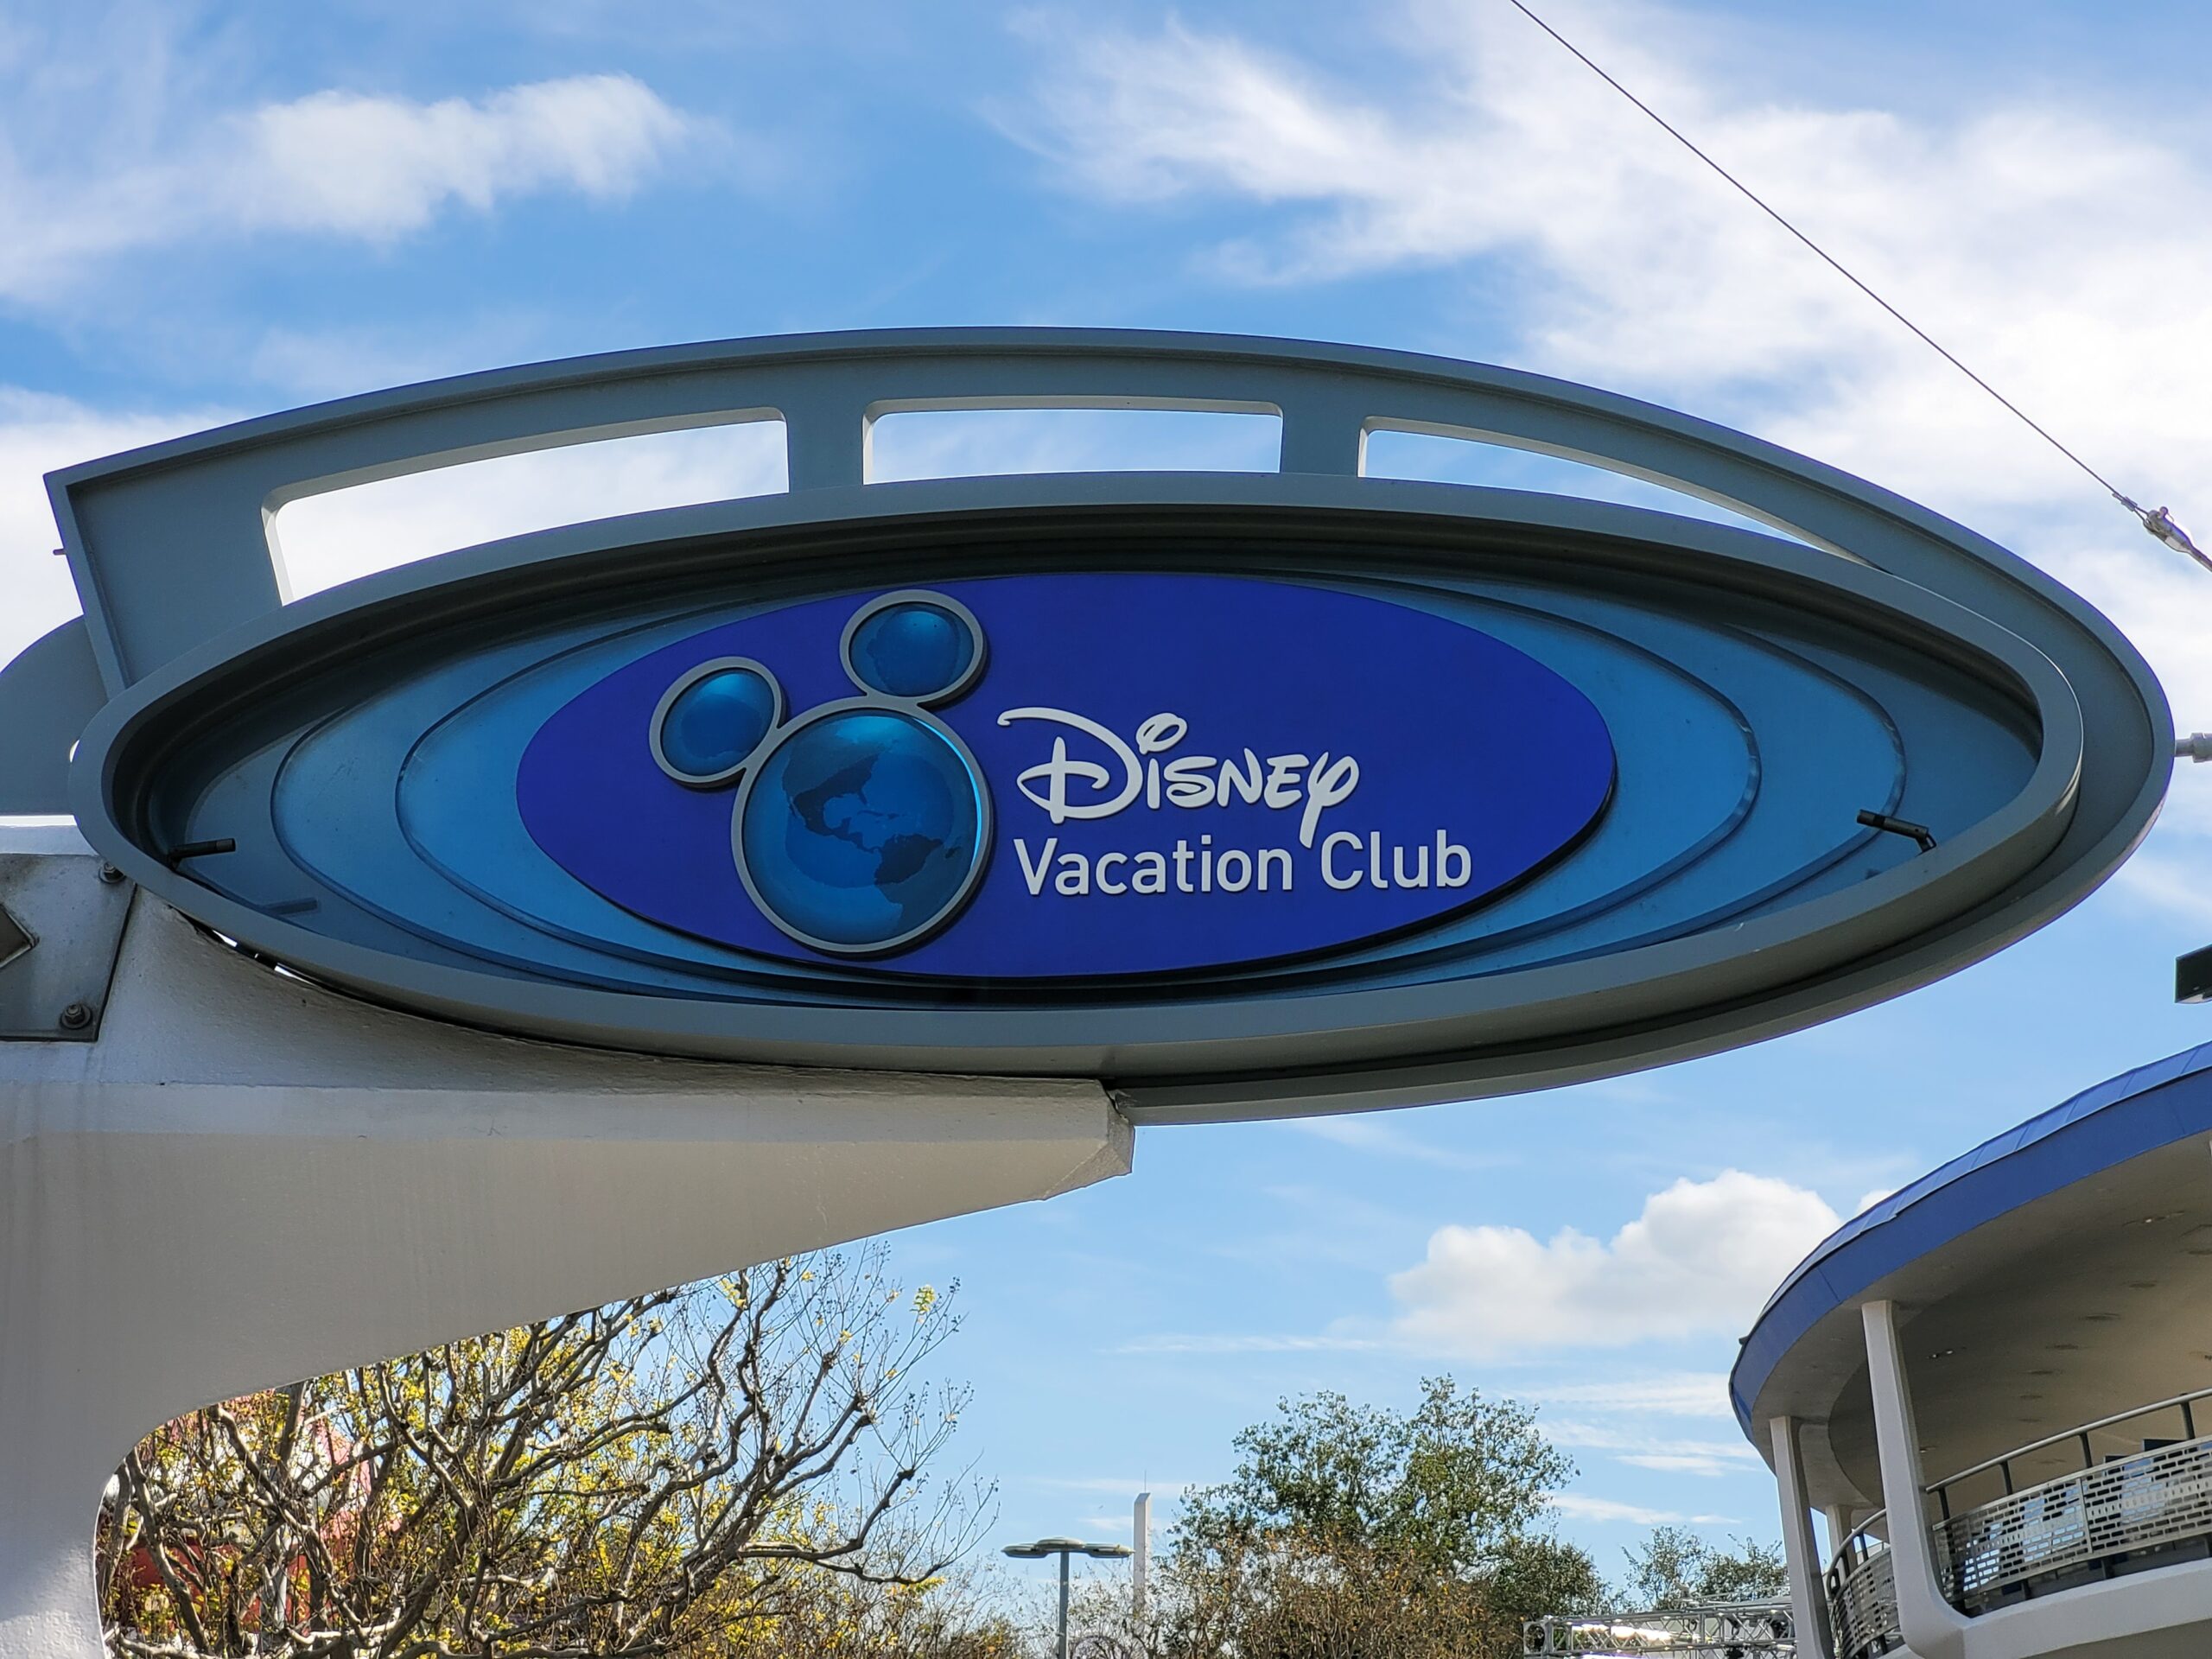 Disney Vacation Club Sign in Tomorrowland